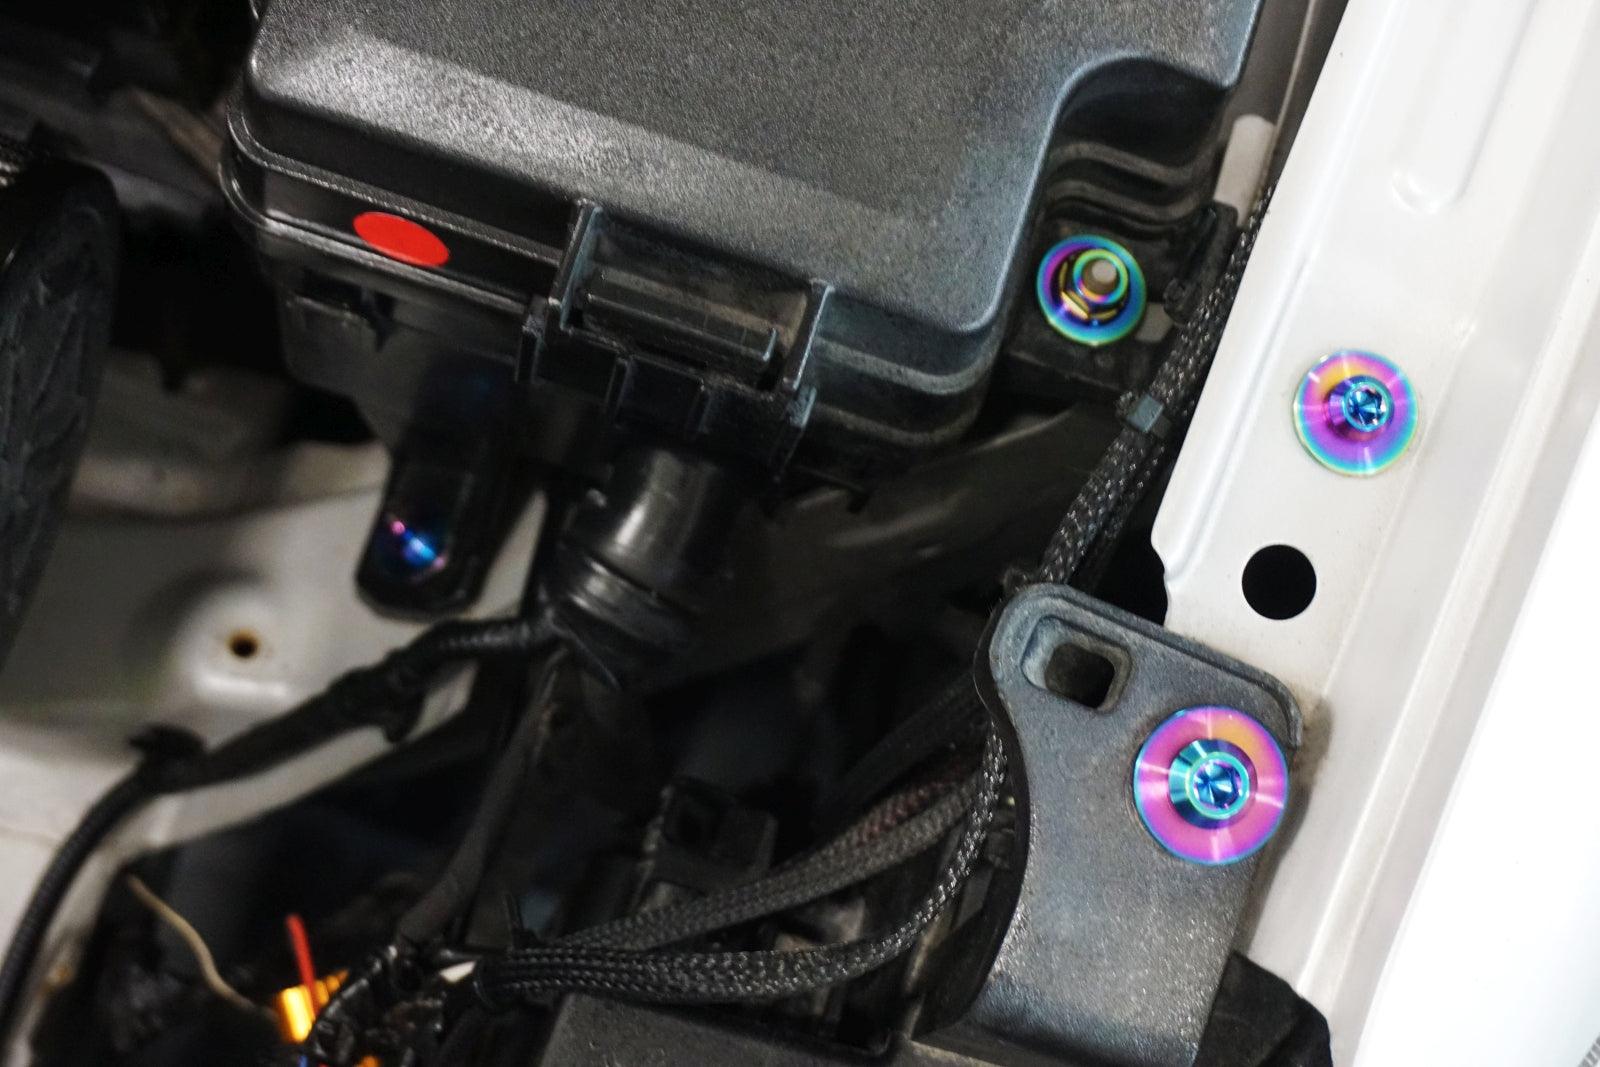 ZSPEC "Stage 3" Dress Up Bolts® Fastener Kit for '17-18 Hyundai Elantra, Titanium  Engine Bay Dress Up Hardware Kit Upgrade Performance Auto Car Import JDM KDM USDM Grade-5 GR5